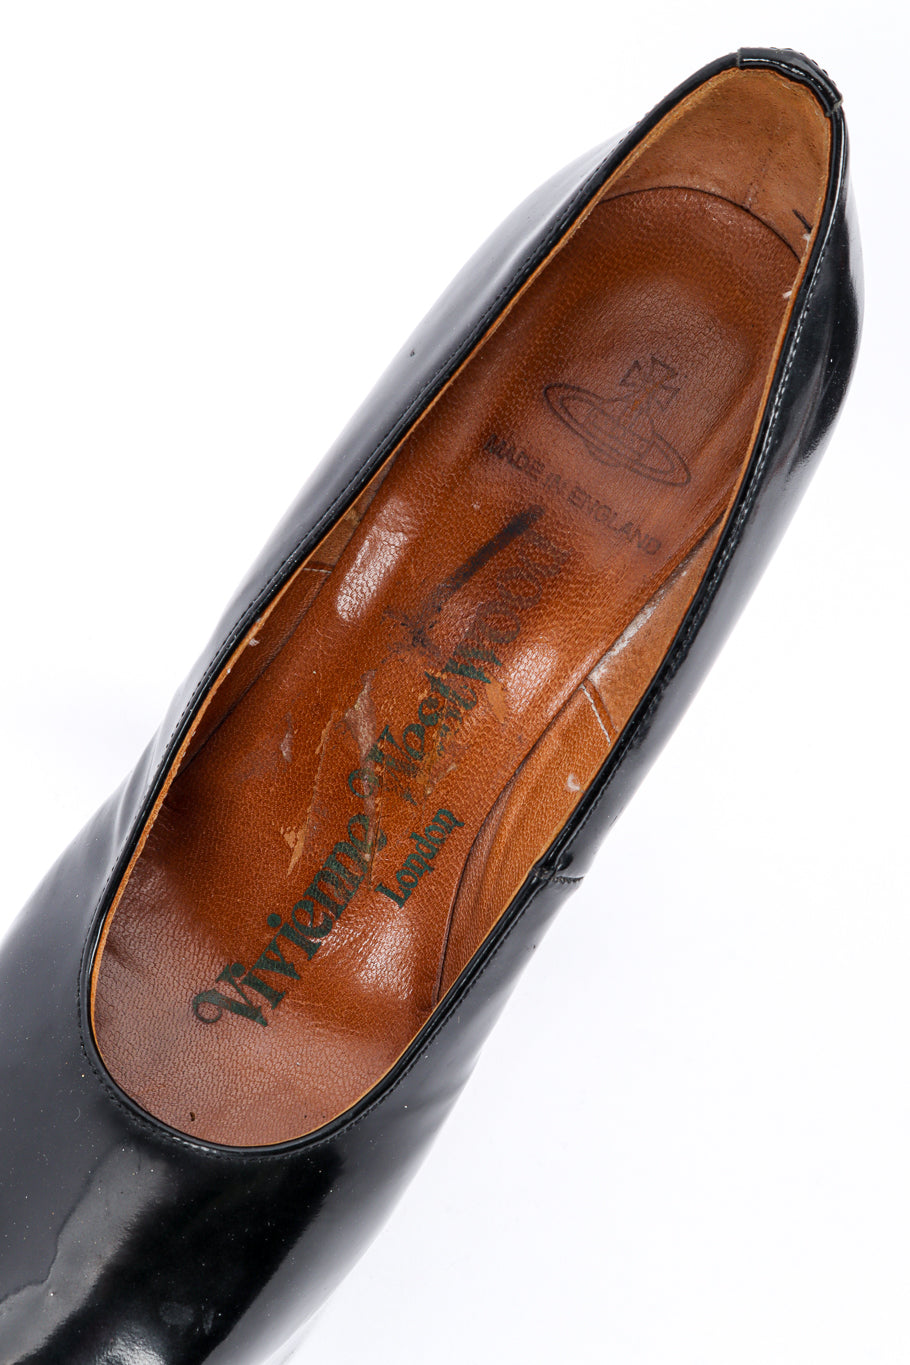 Vintage Vivienne Westwood 1993 F/W Patent Leather Elevated Court Shoe branded insole @recessla